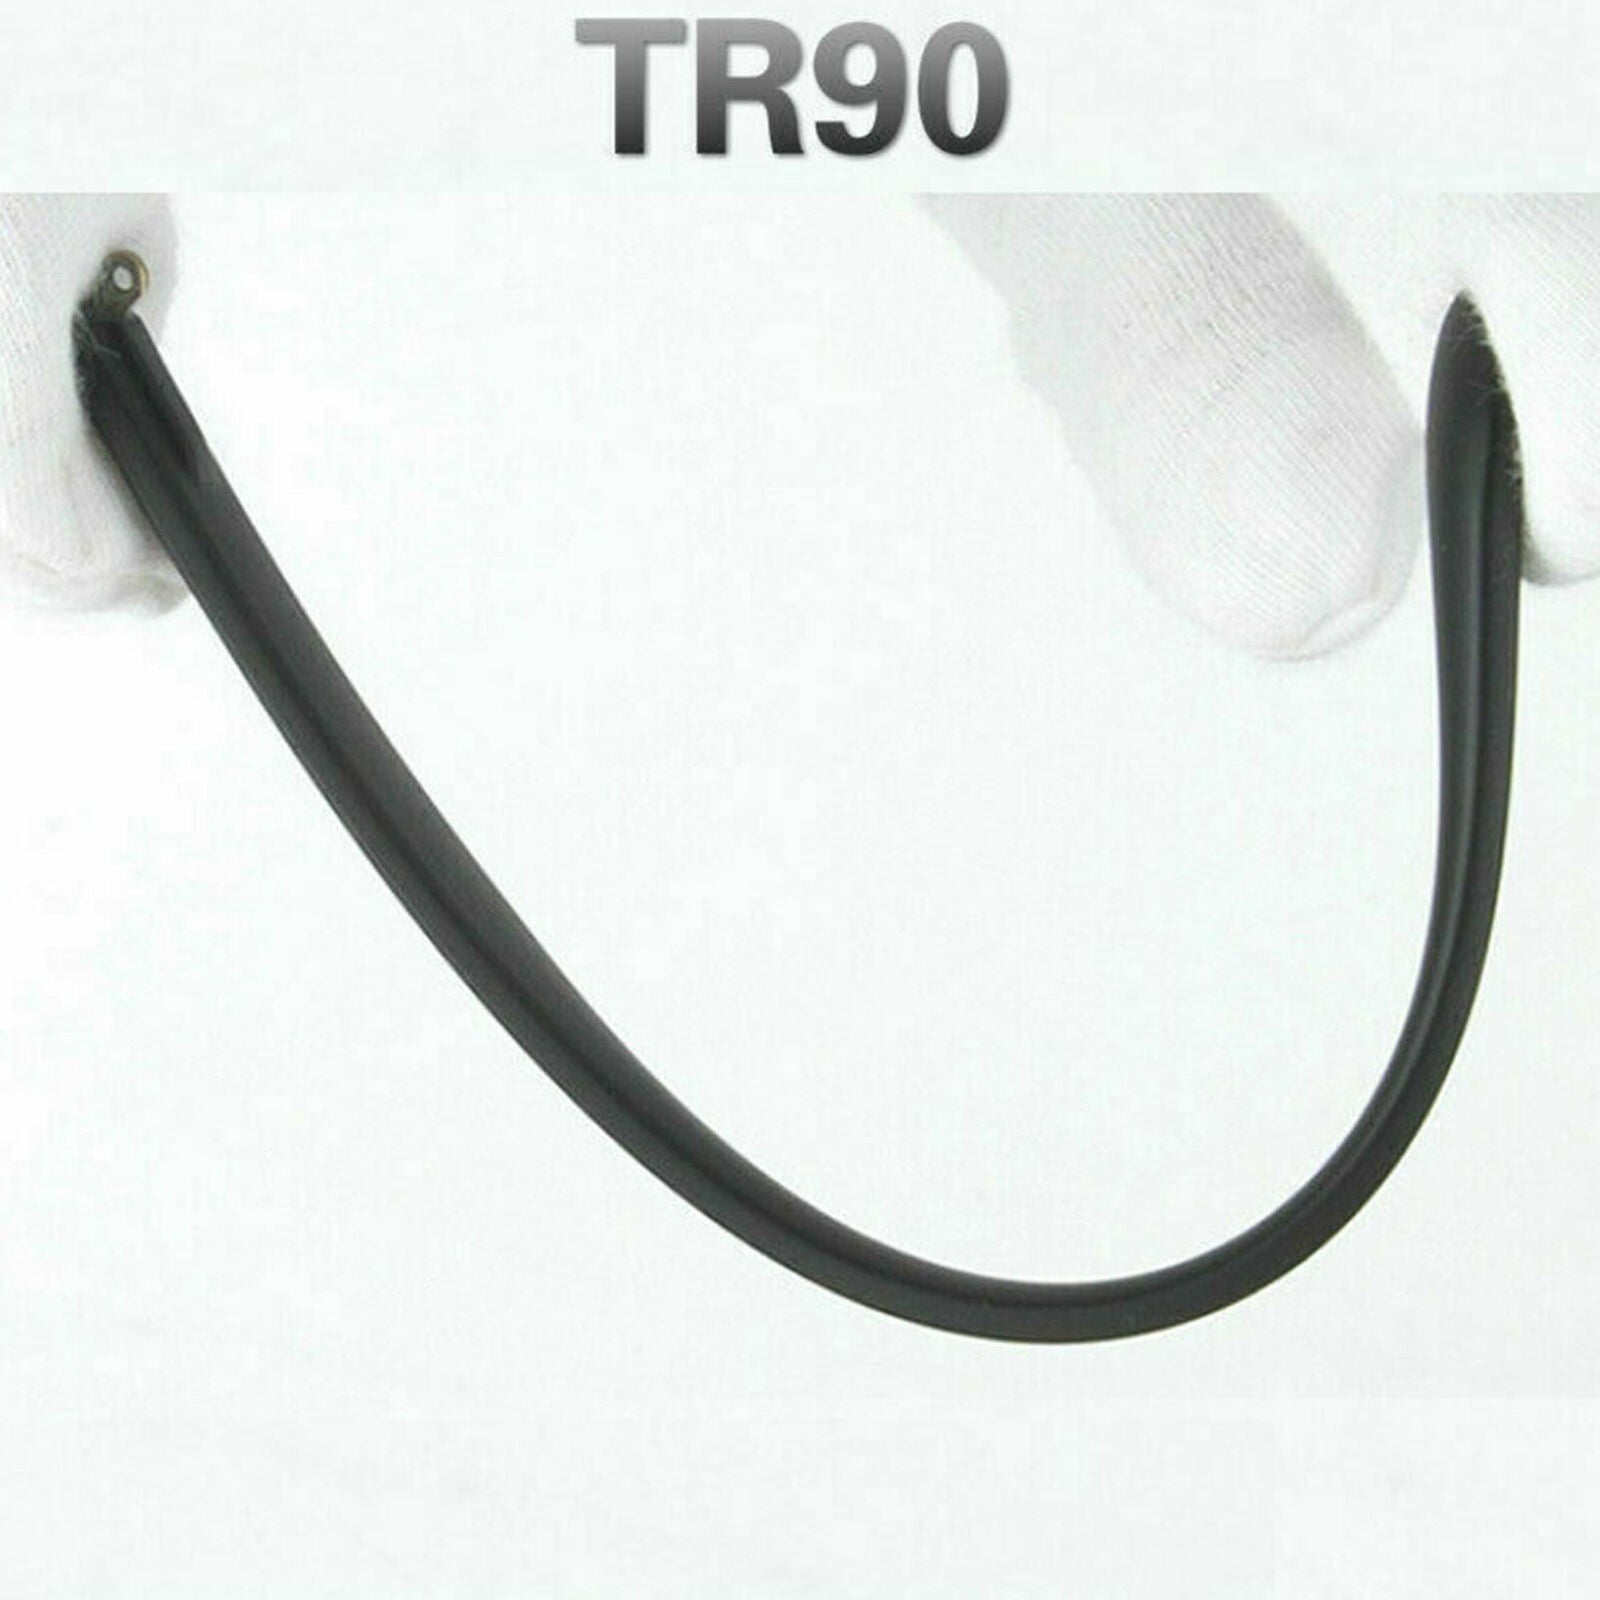 1 Pair 140mm Replacement TR90 Arm Temple Glasses Sunglasses Repair DIY Accessory